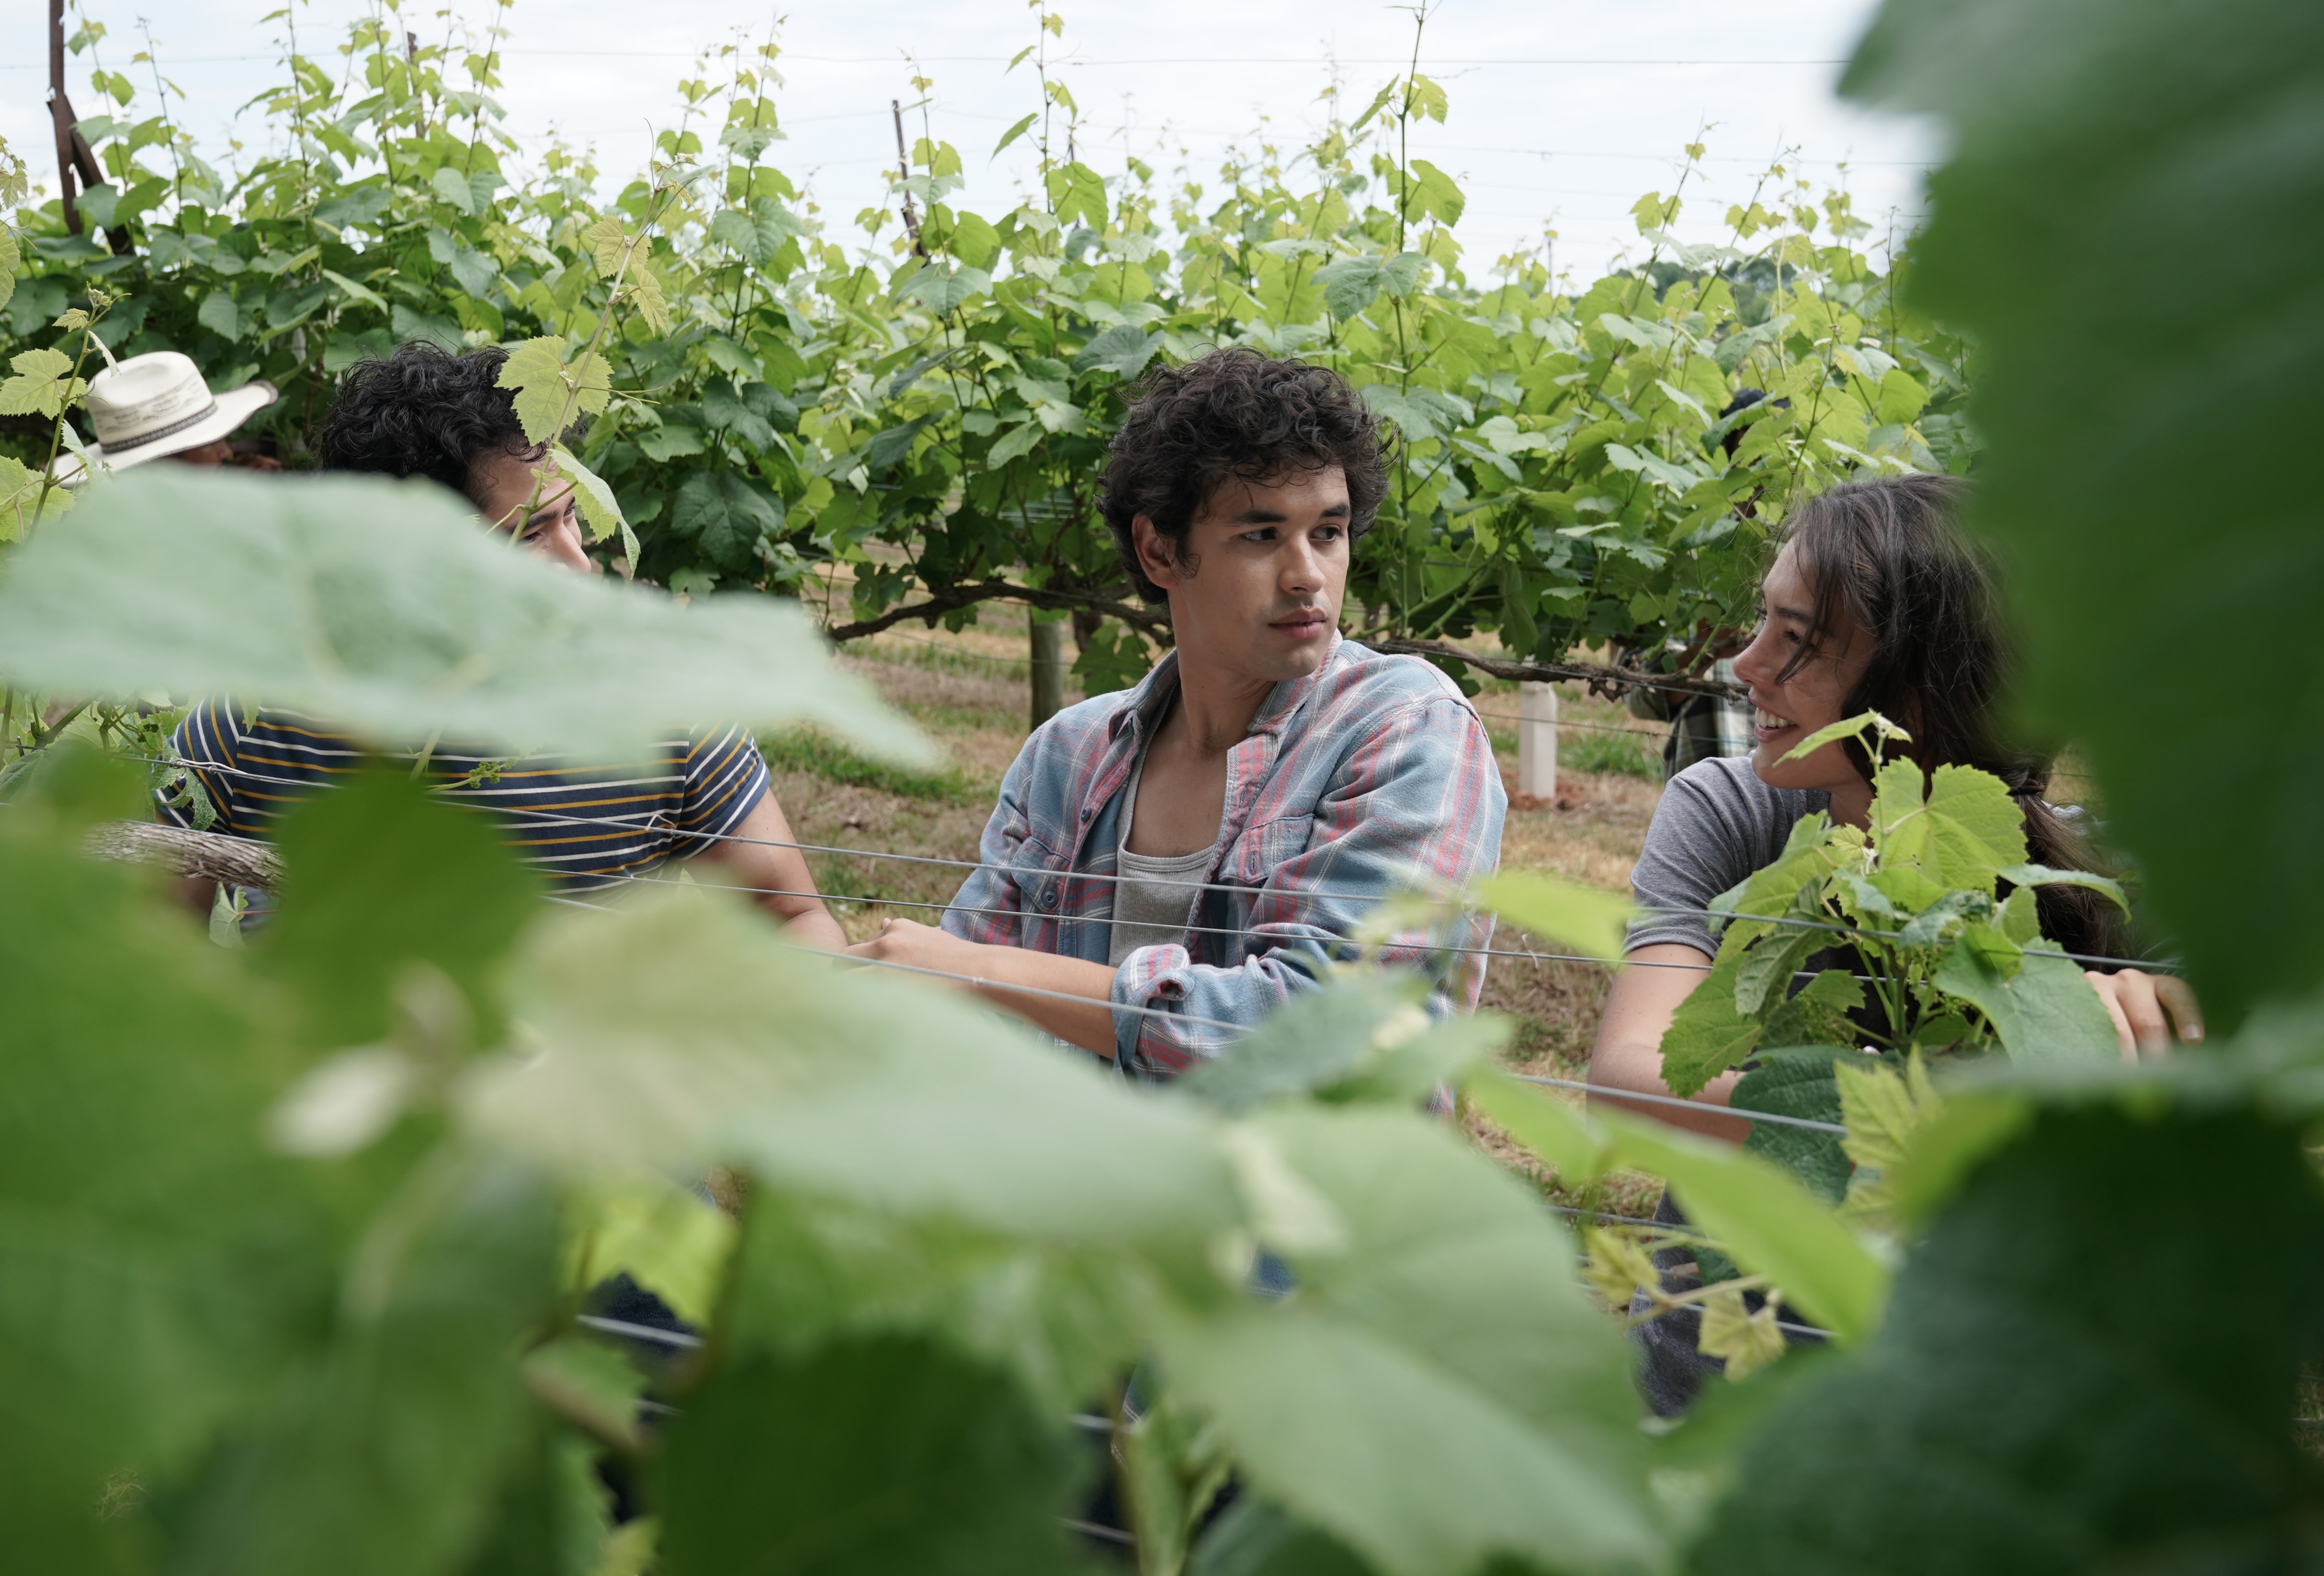 'Promised Land' cast members Andres Velez and Katya Martin as Carlos and Juana speaking in a vineyard.